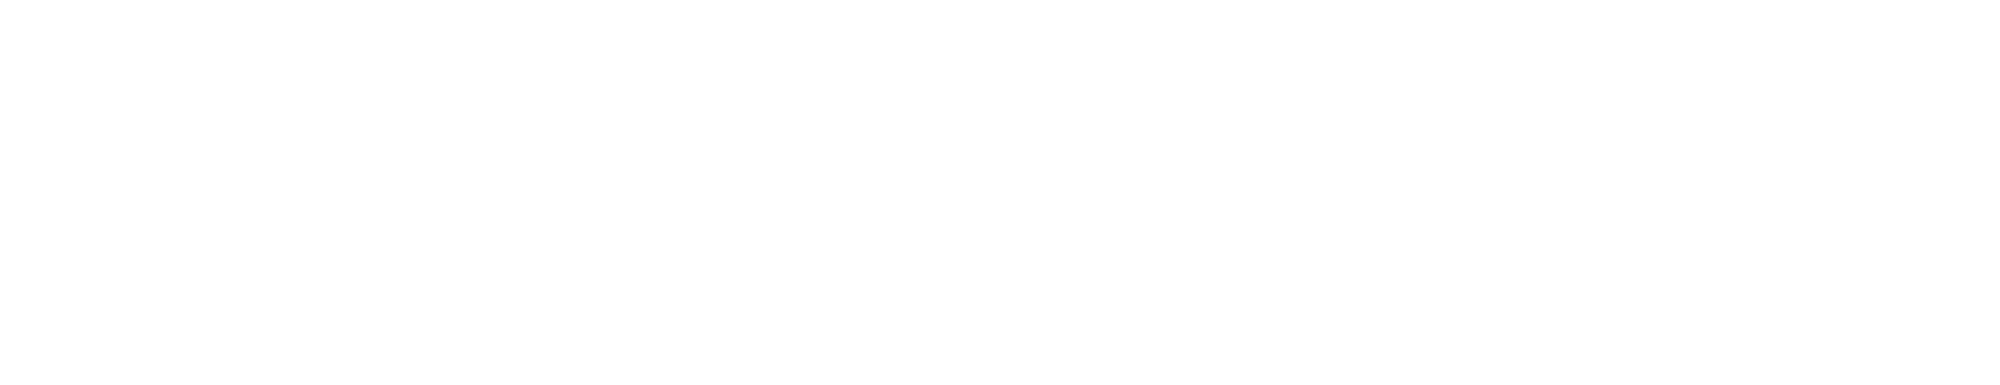 Onprivacy effizienter Datenschutz Logo